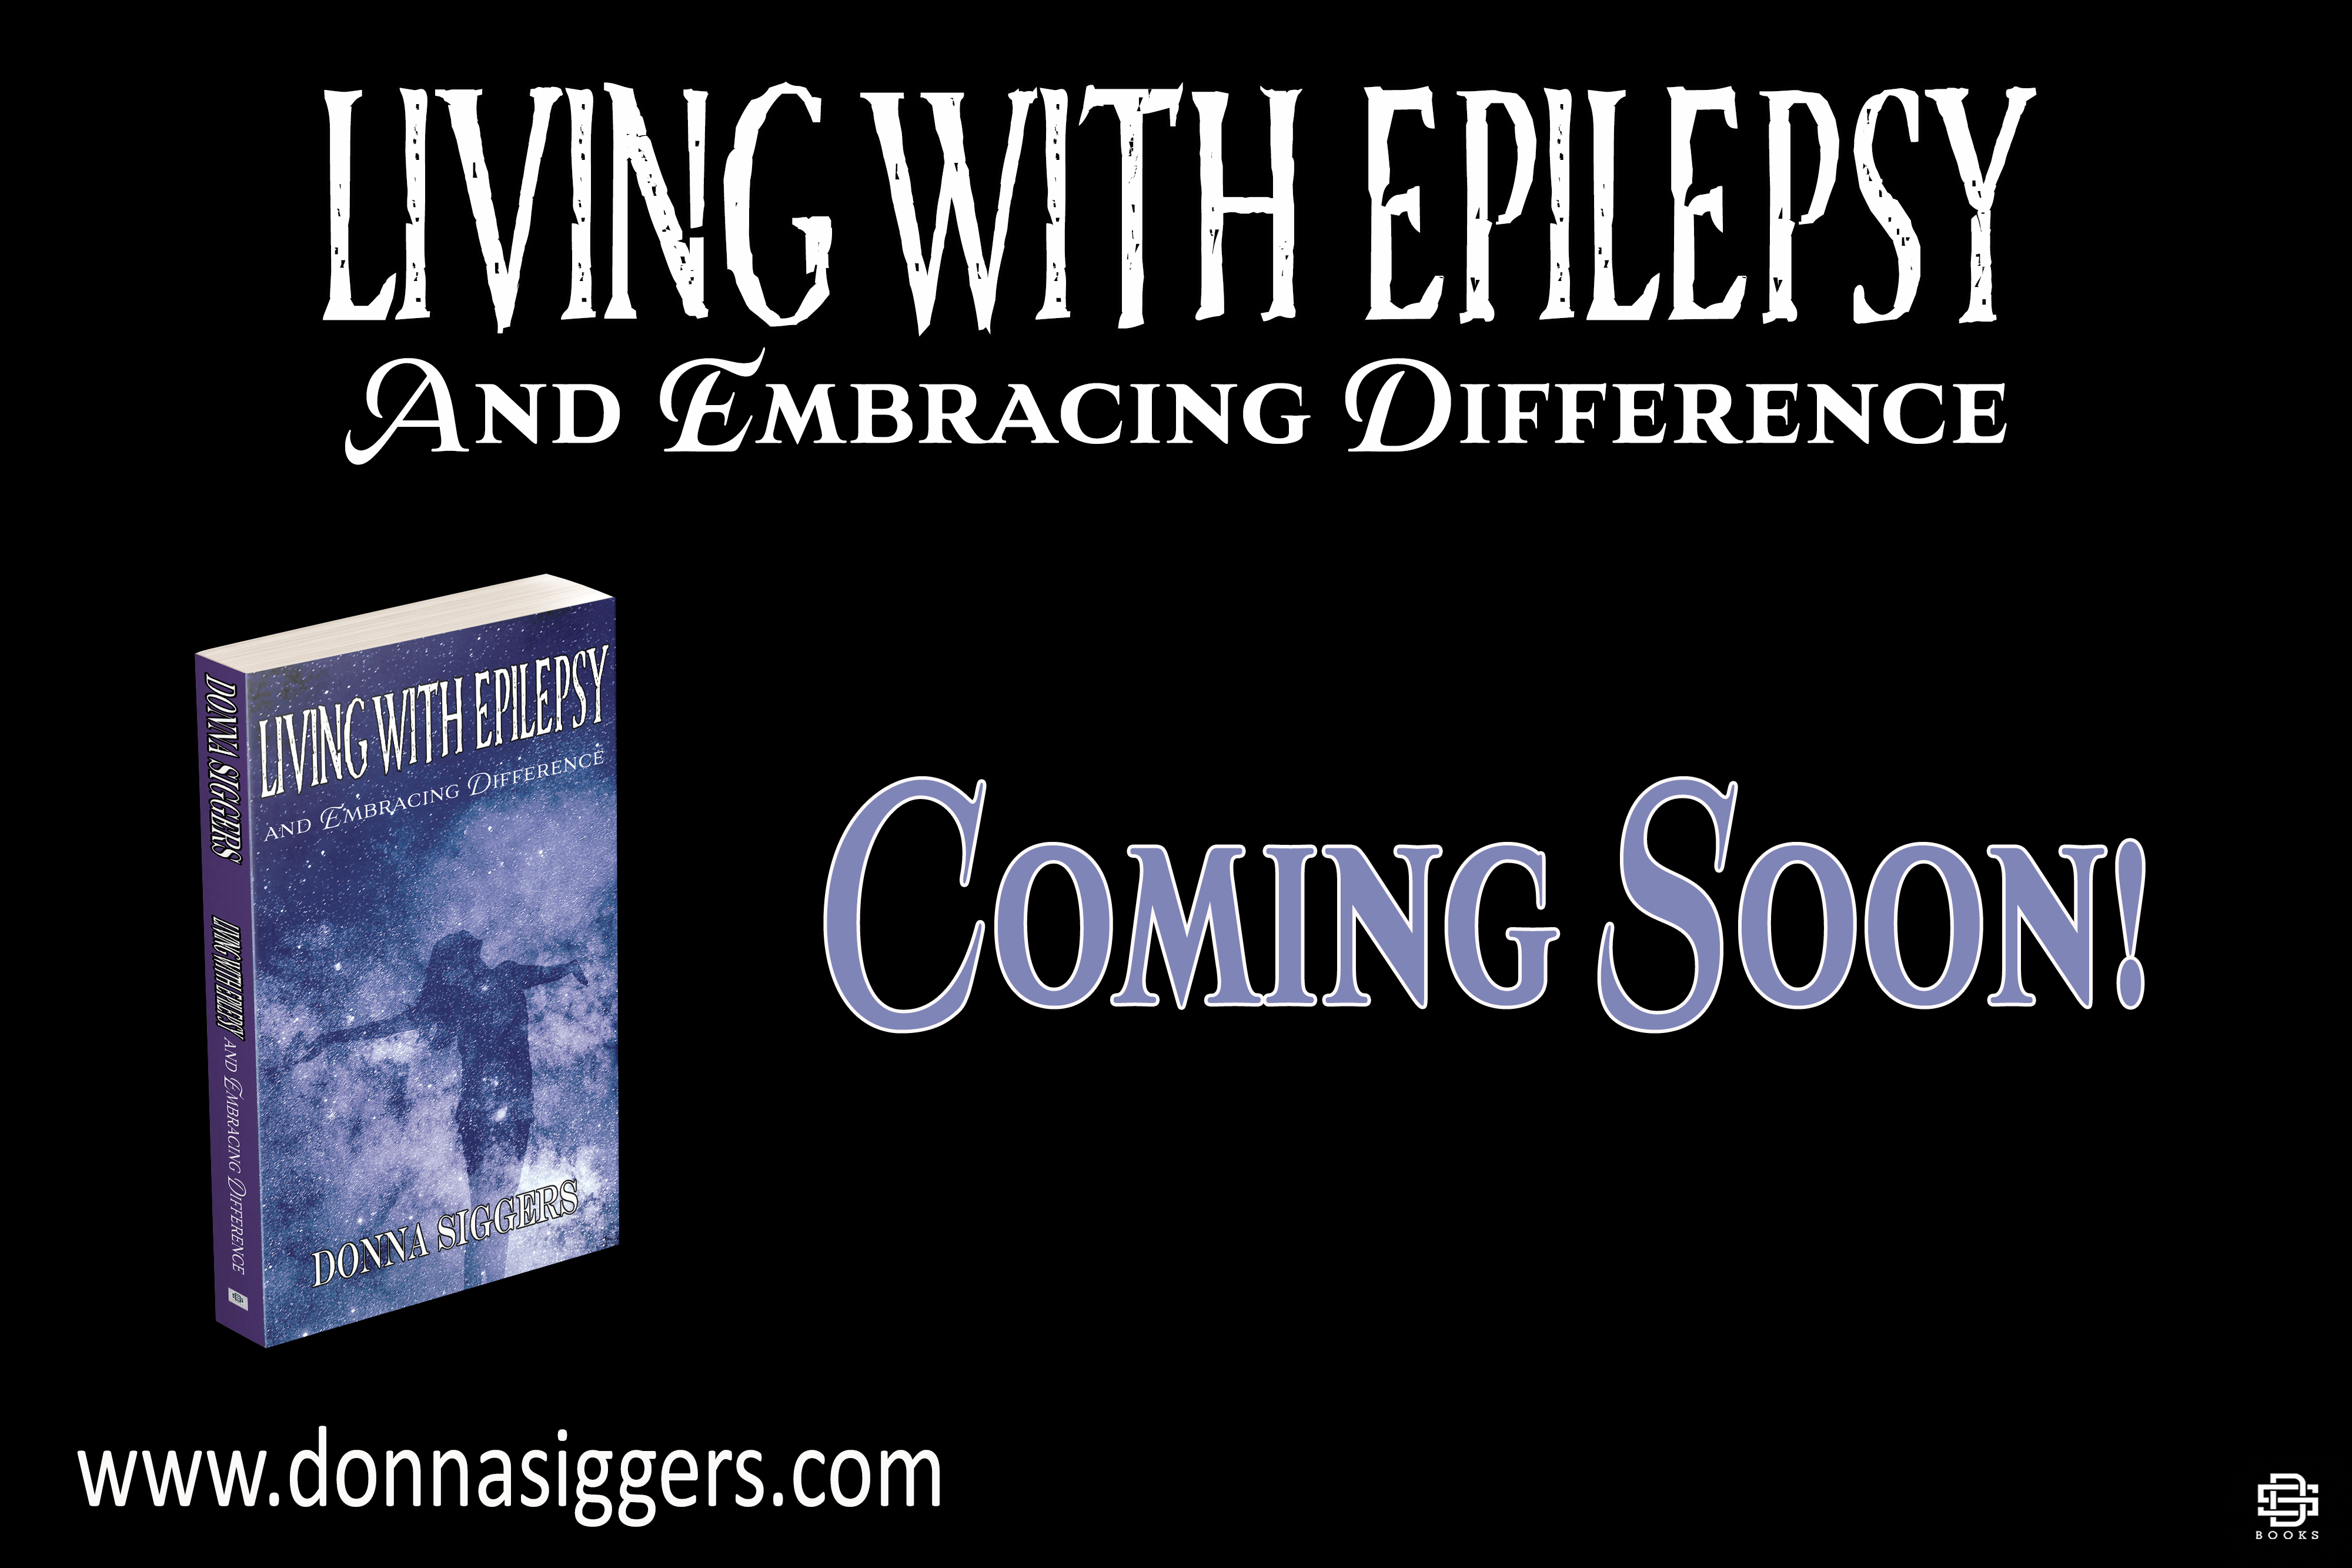 EpilepsyAdvert-Websitejpg